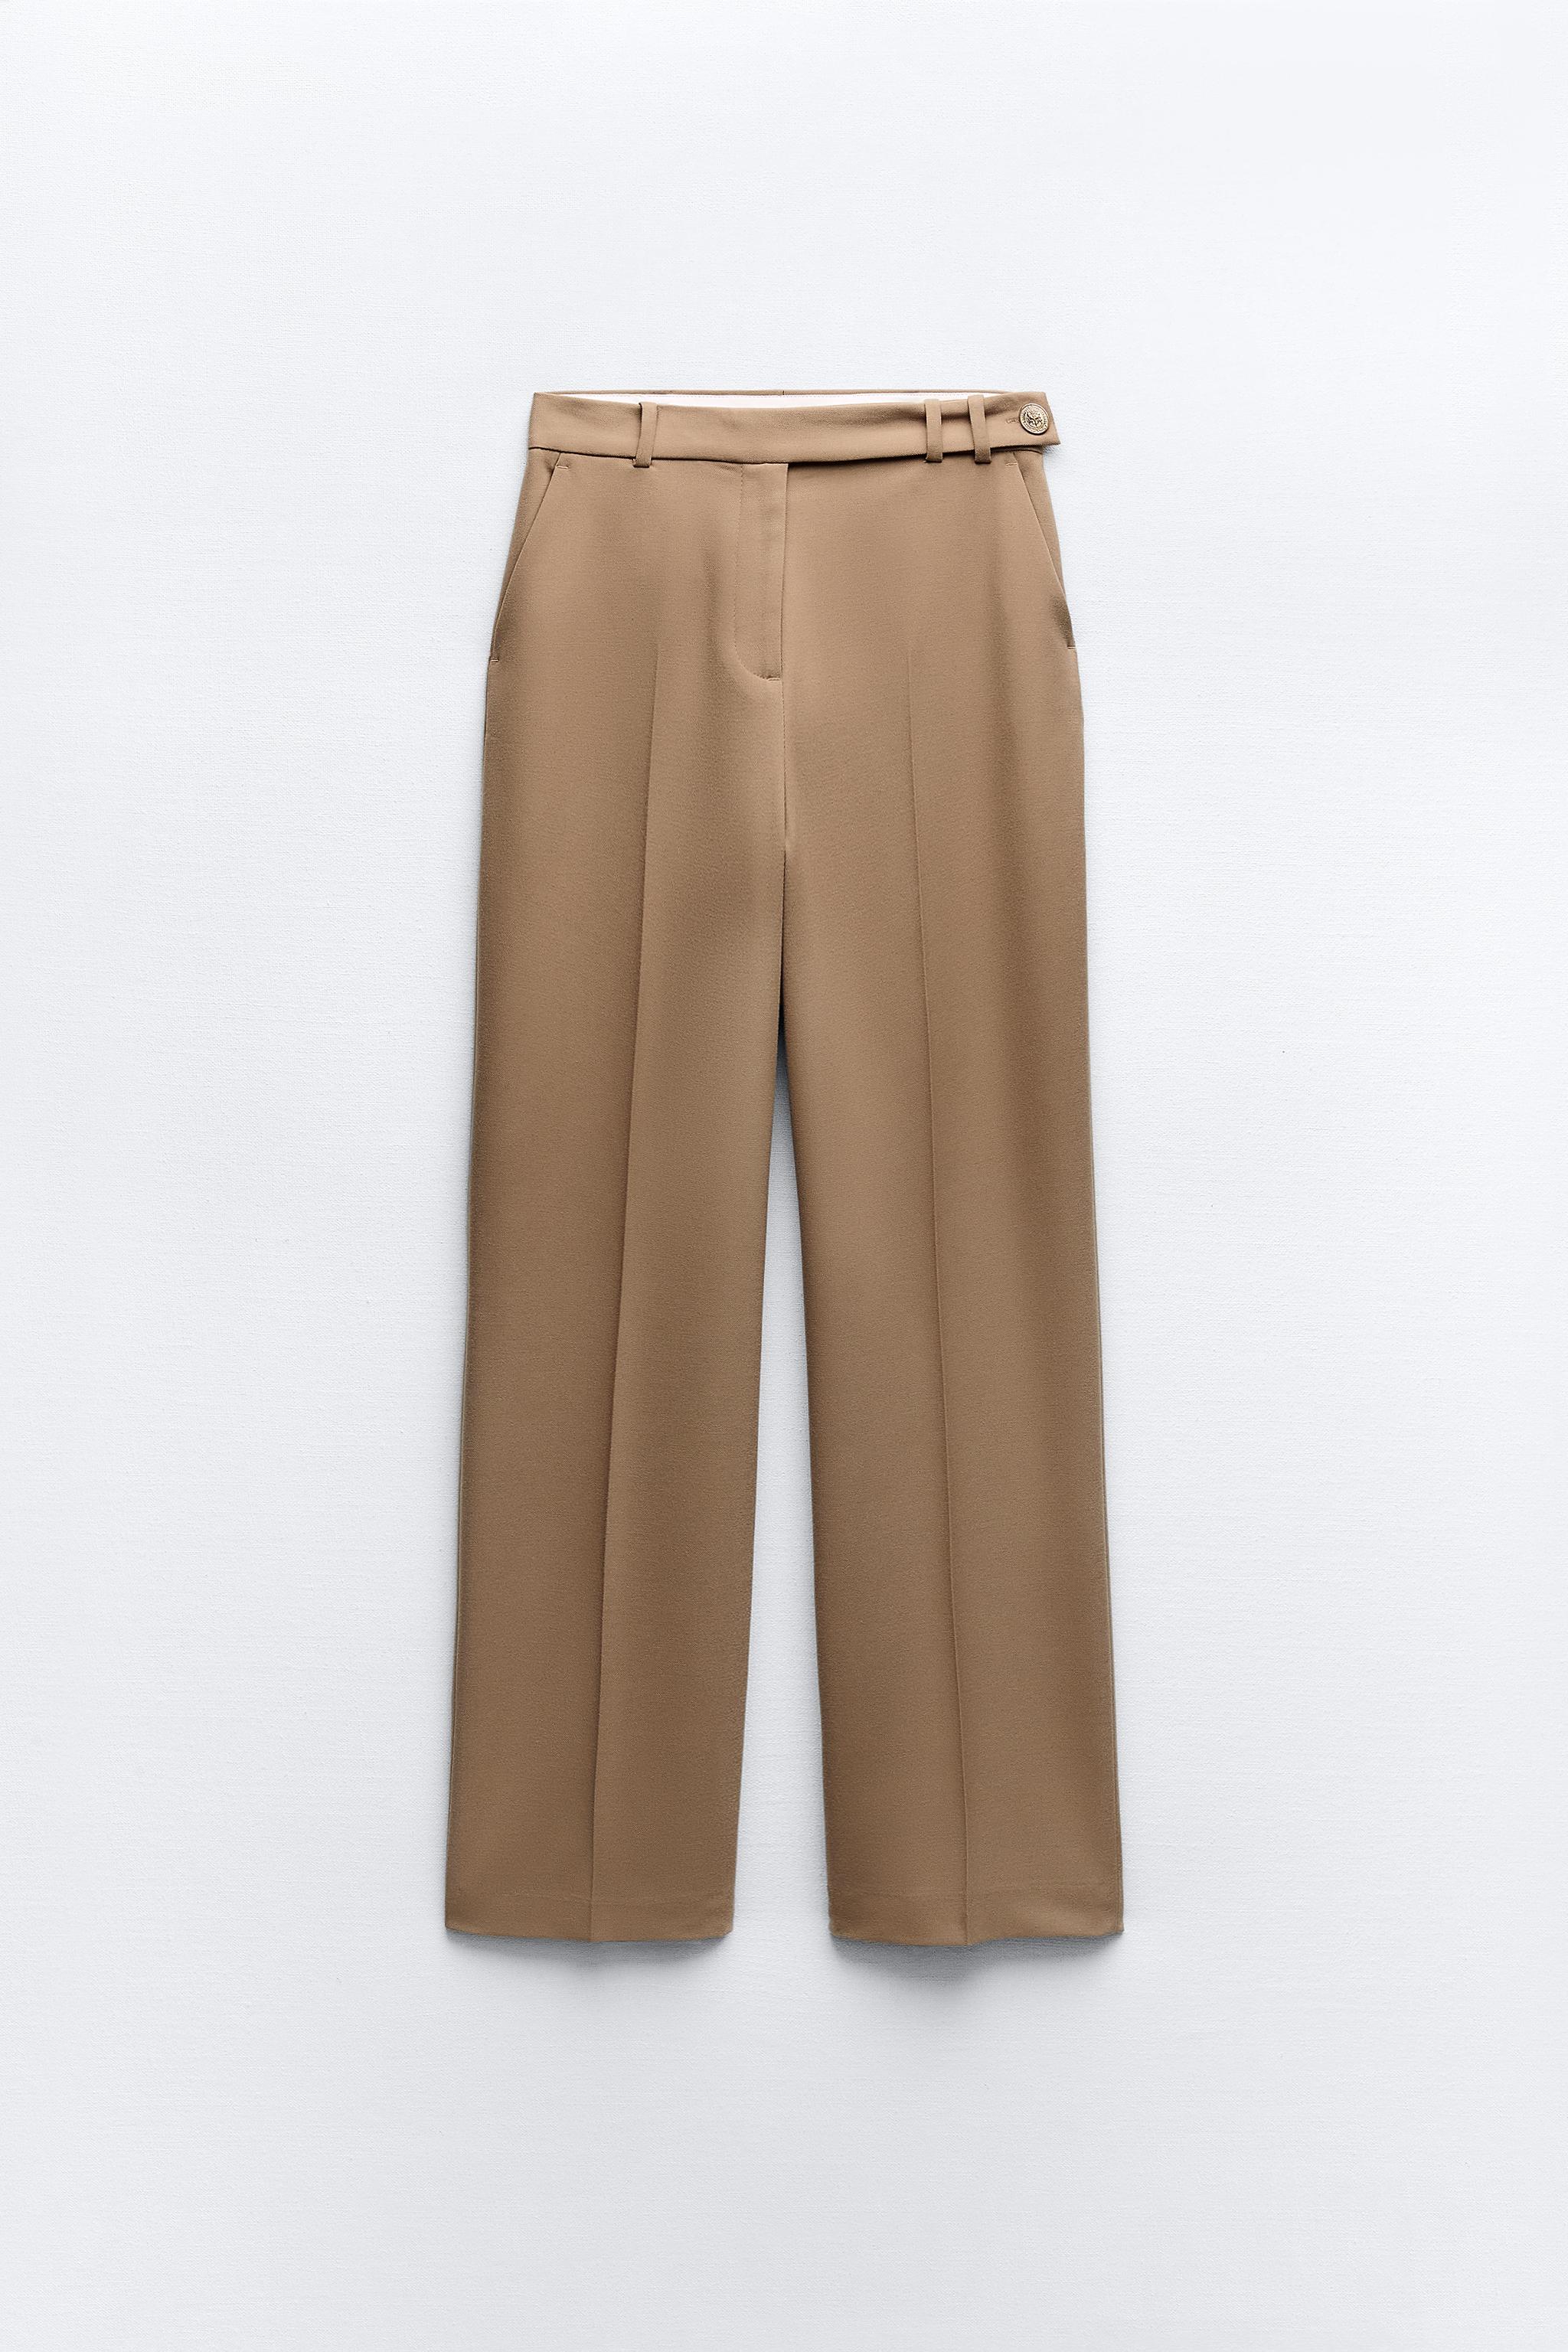 Zara, Pants & Jumpsuits, Nwot Zara Wide Leg Flowy Pants Xs